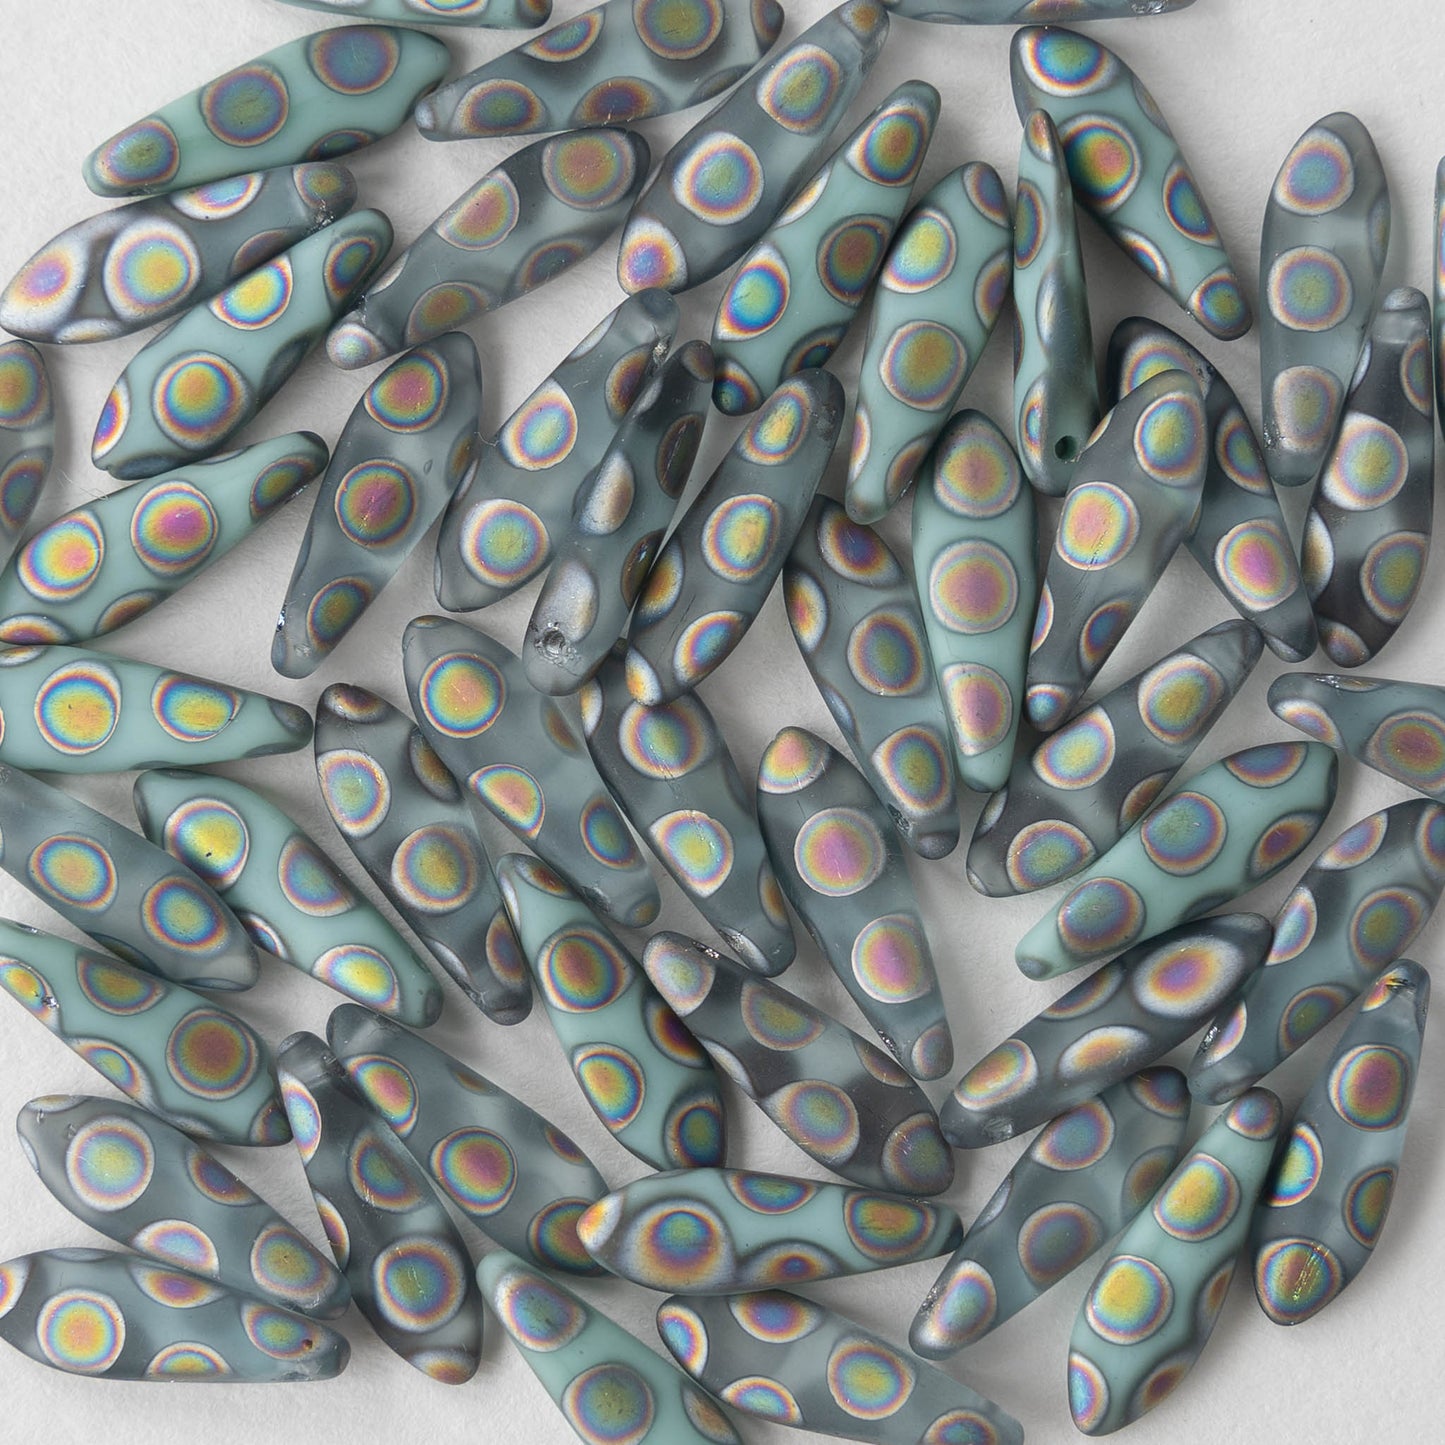 16mm Dagger Beads - Seafoam Peacock - 50 beads